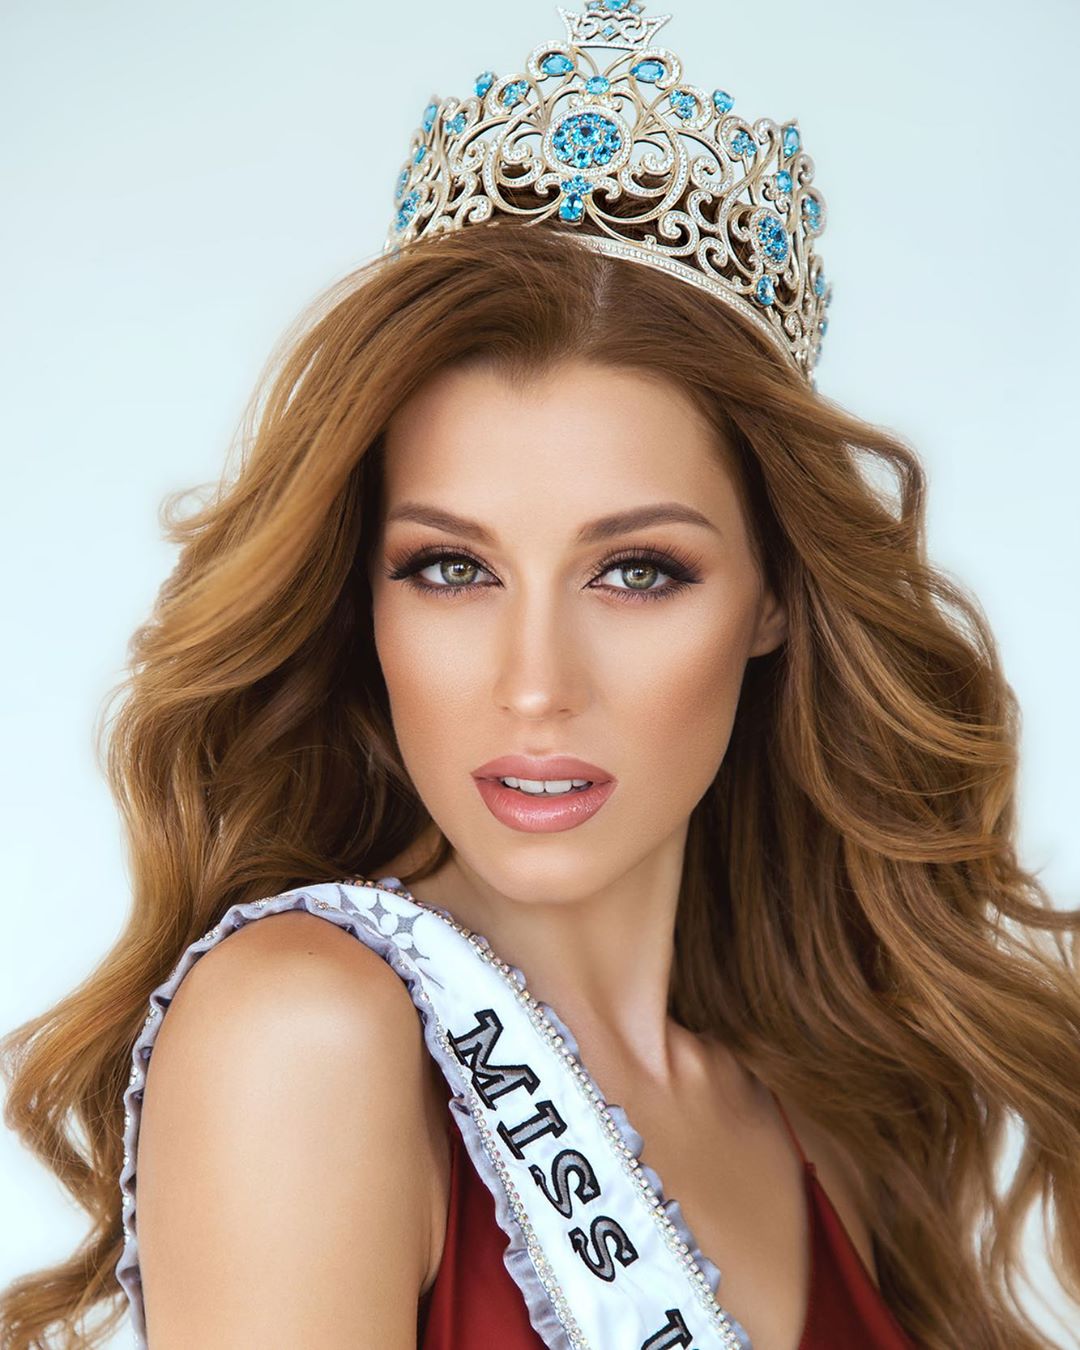 Miss circle photo. "Мисс Украина Вселенная 2019". Мисс Украина 2020 победительница. Miss Universe 2019 участницы.